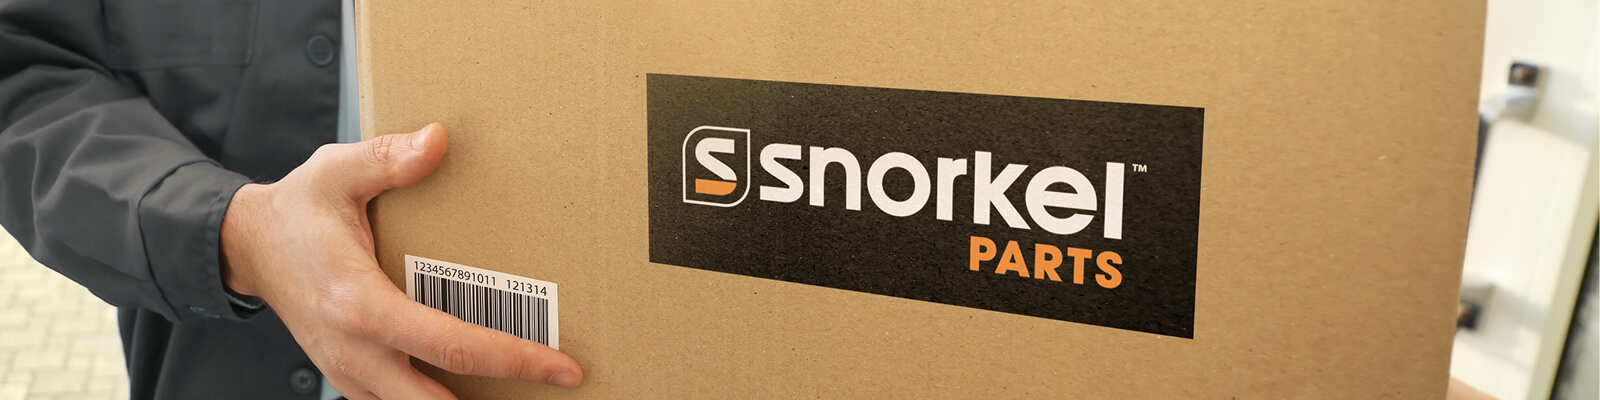 Snorkel Parts Return